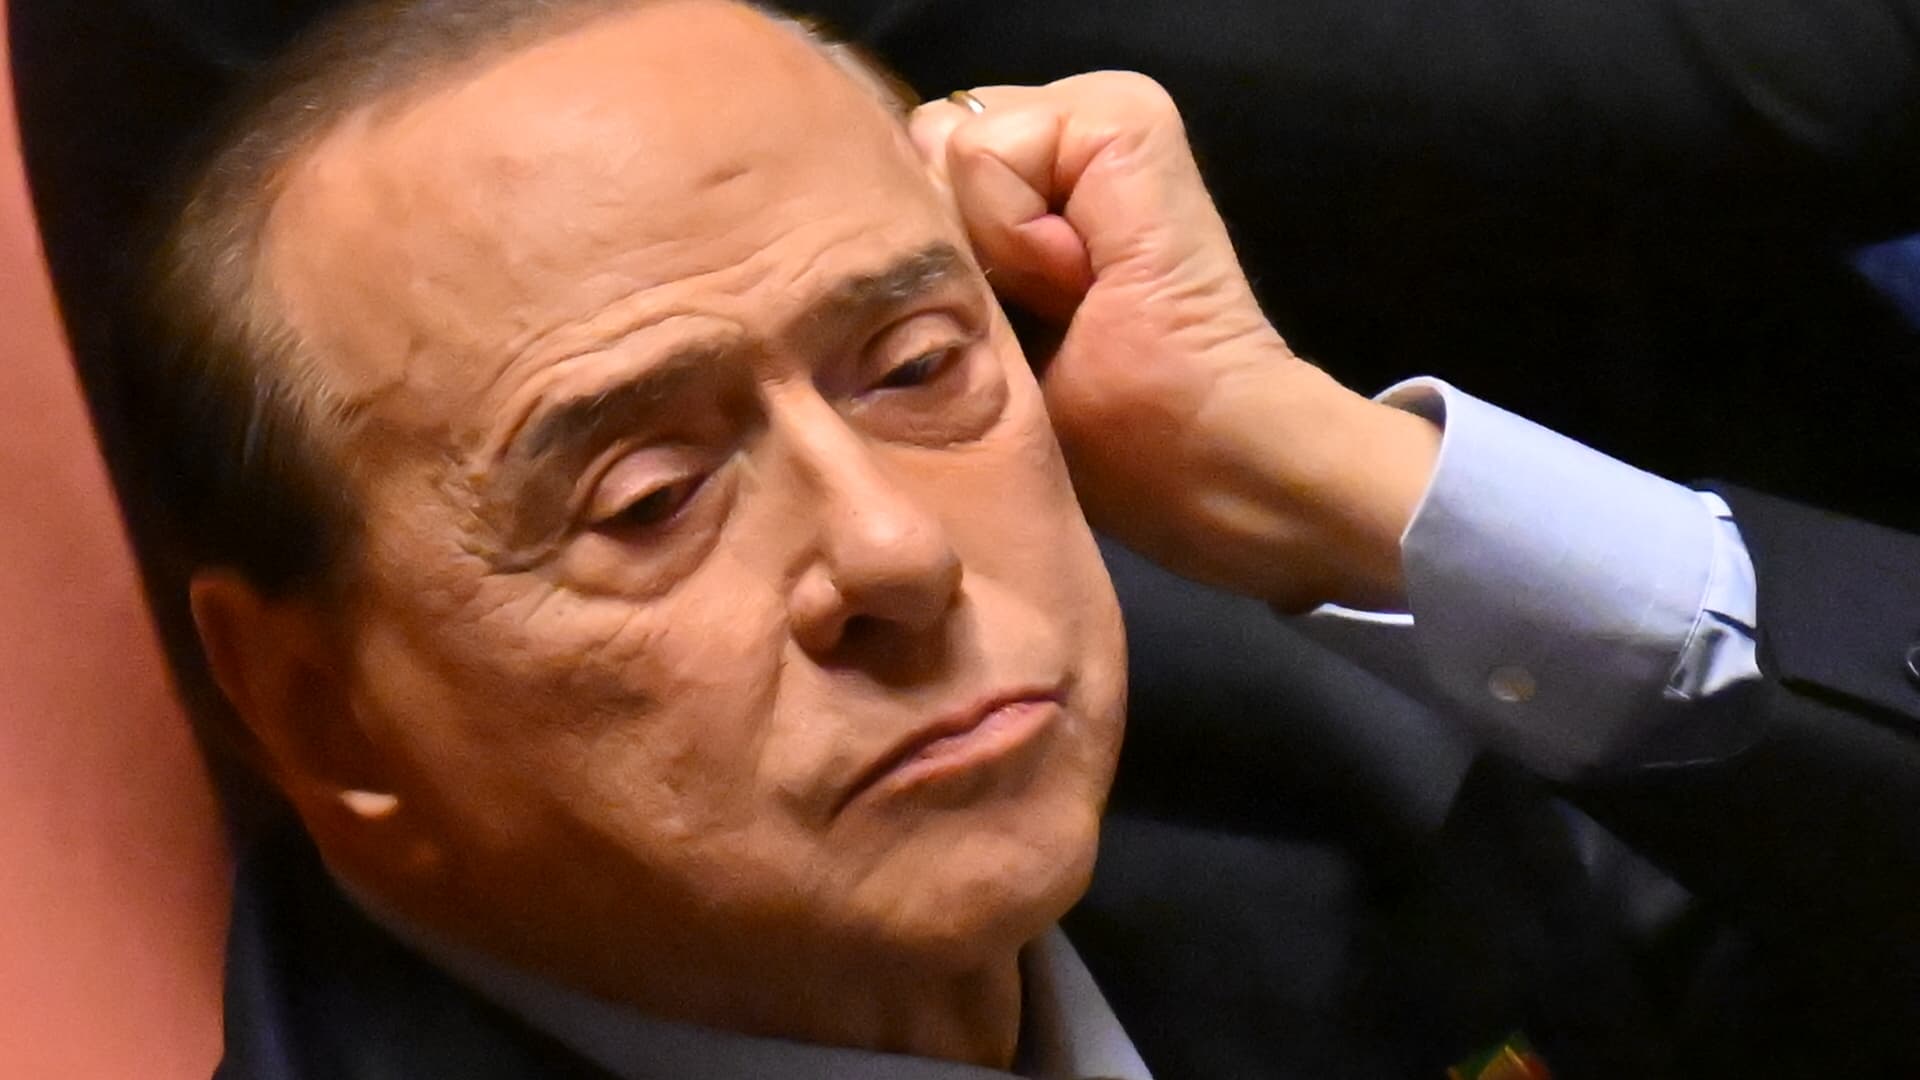 Silvio Berlusconi Sort des Soins Intensifes, Meise Rest Hospitalis